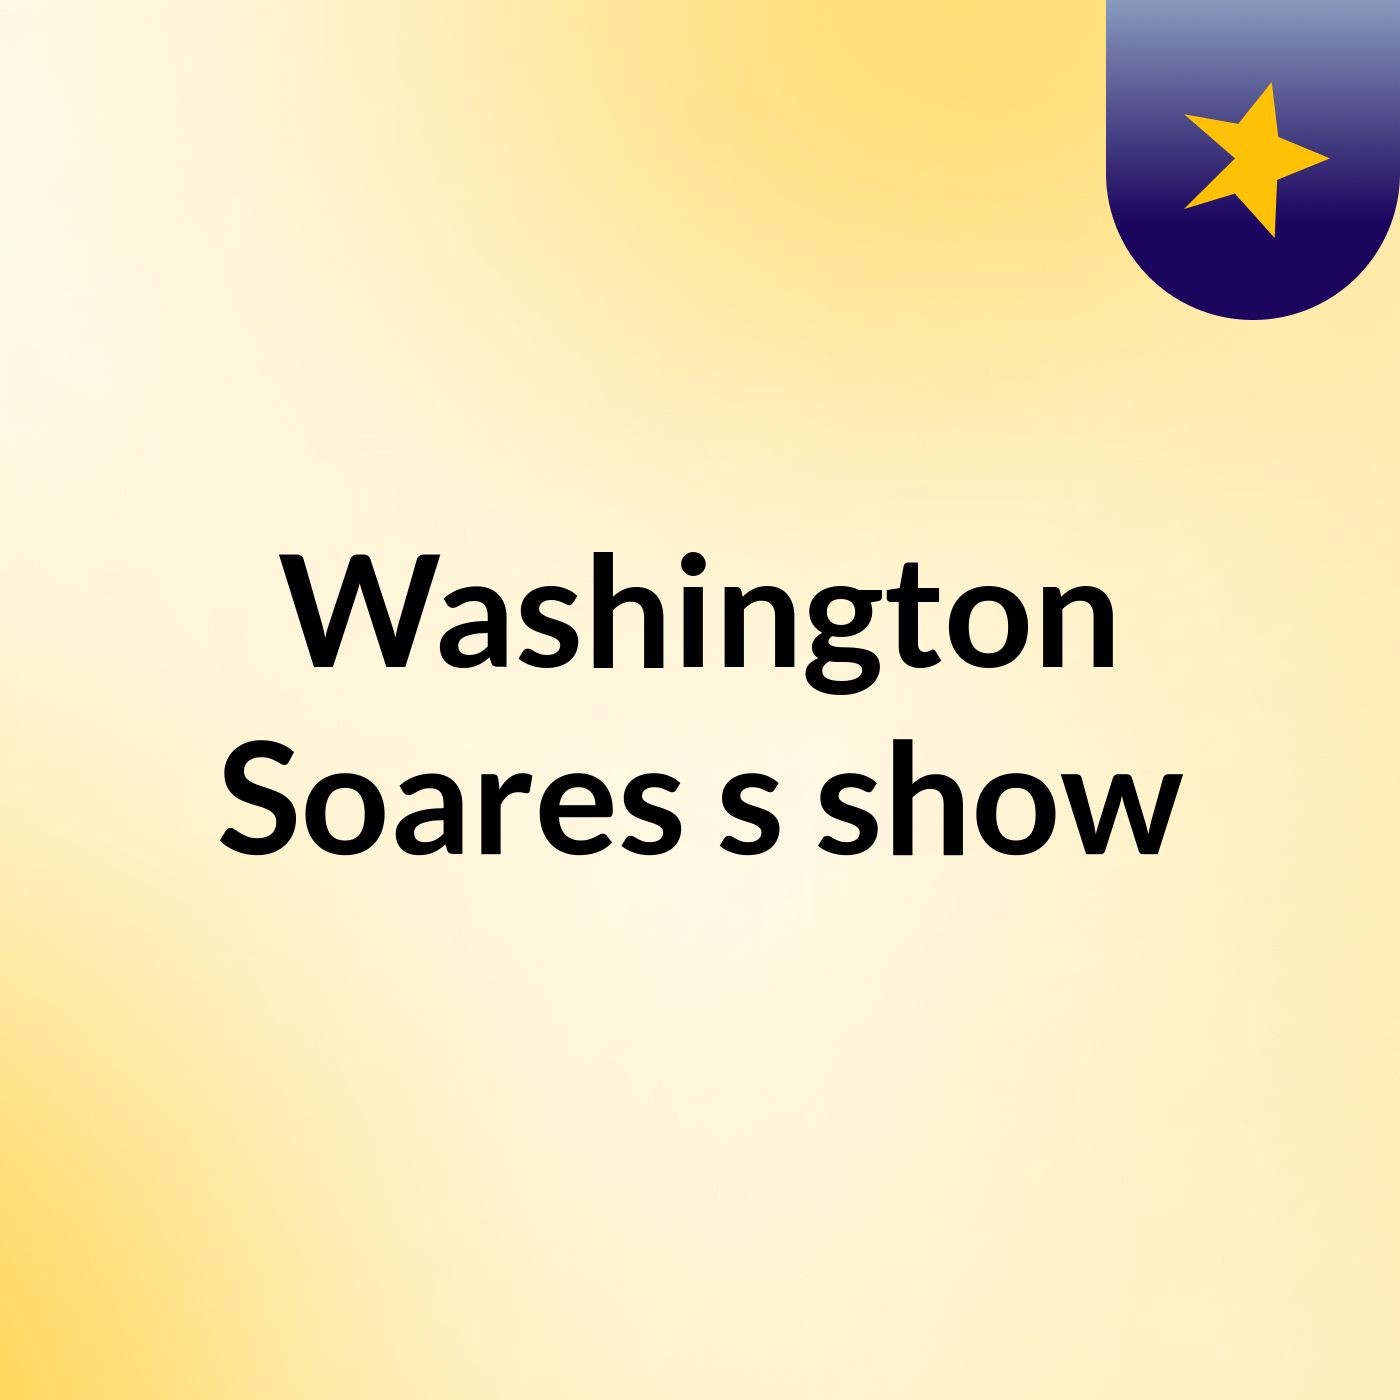 Washington Soares's show